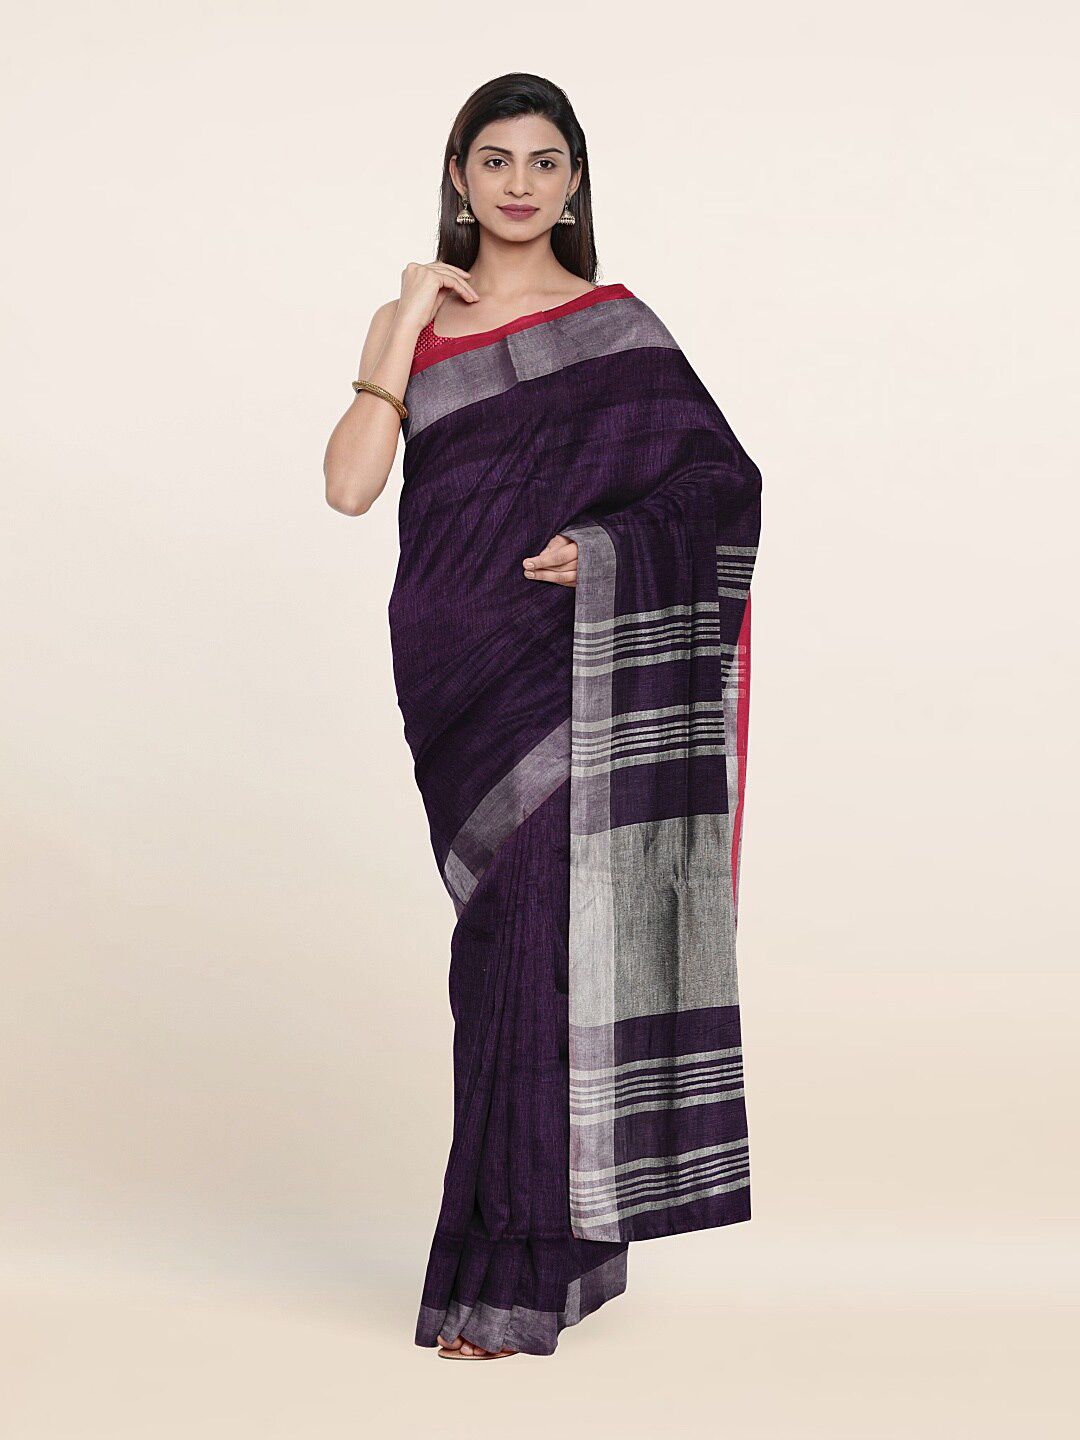 Pothys Violet & Grey Zari Linen Blend Saree Price in India